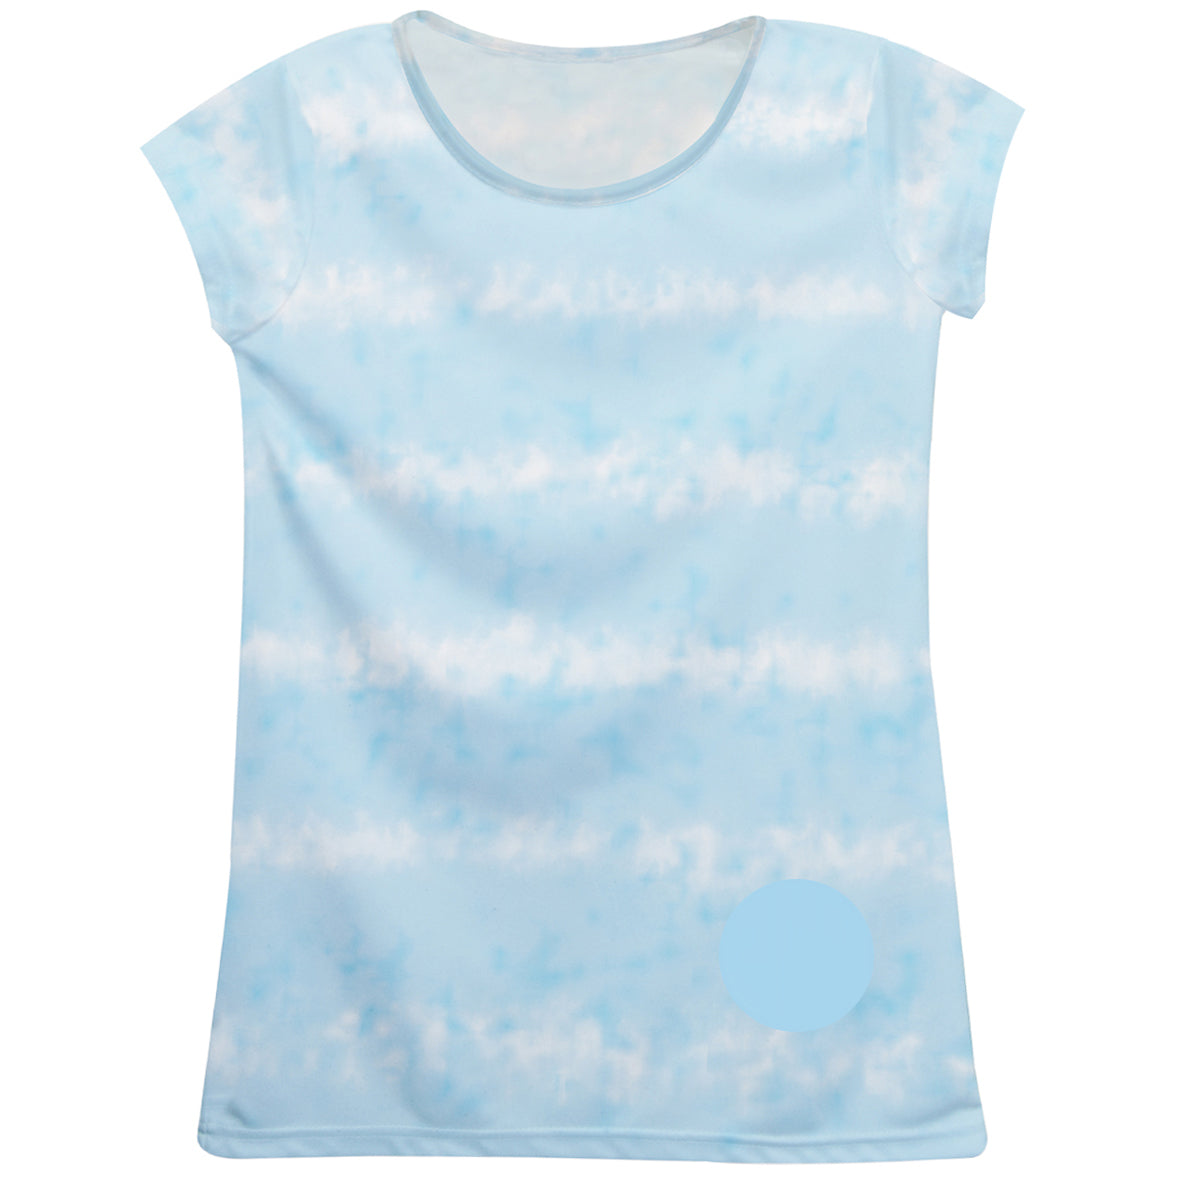 Monogram Light BlueTie Dye Short Sleeve Tee Shirt - Wimziy&Co.